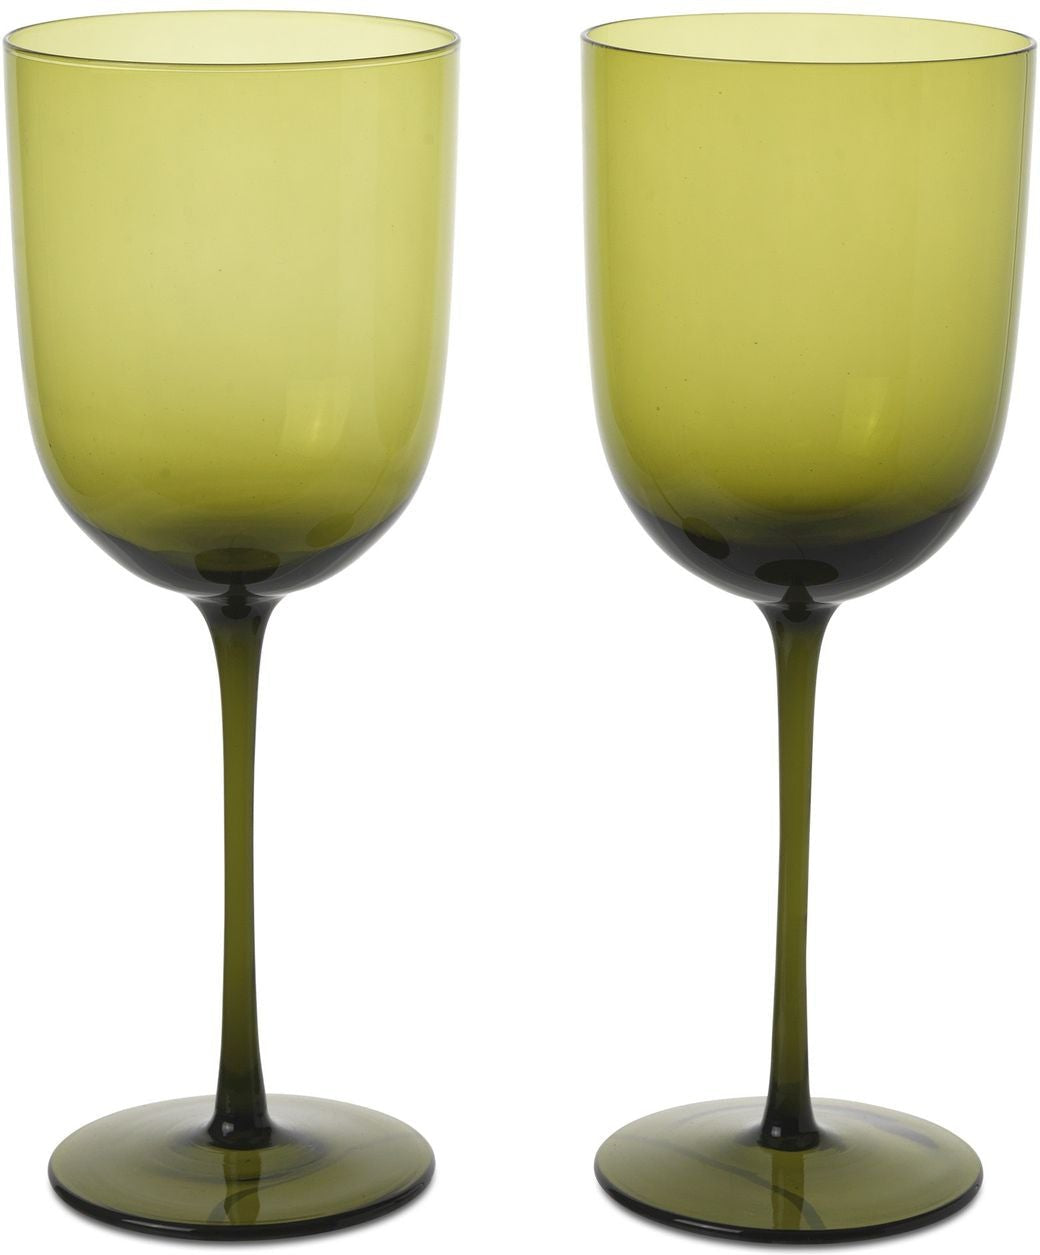 Ferm Living Host Red Wine Glasses 36 Cl Set Of 2, Moss Green